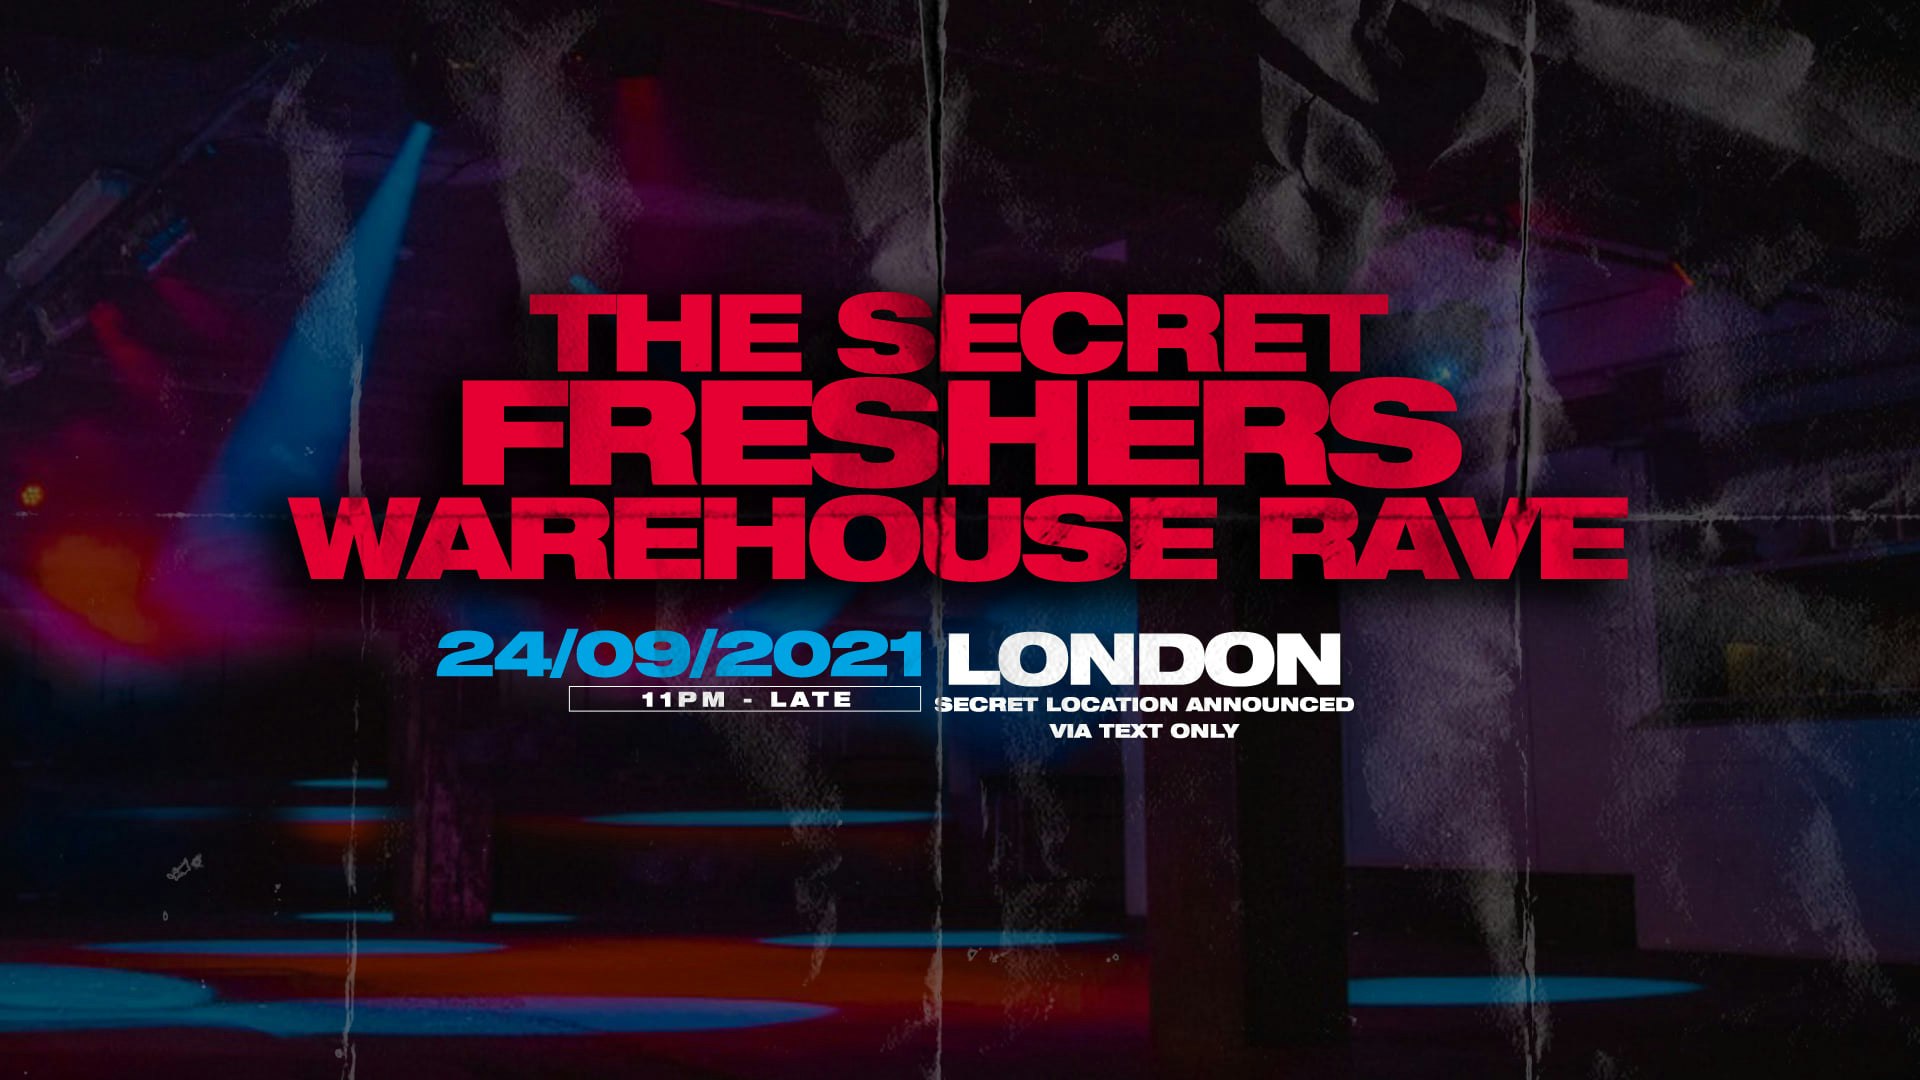 The Secret Freshers Warehouse Rave – London : ON SALE NOW!